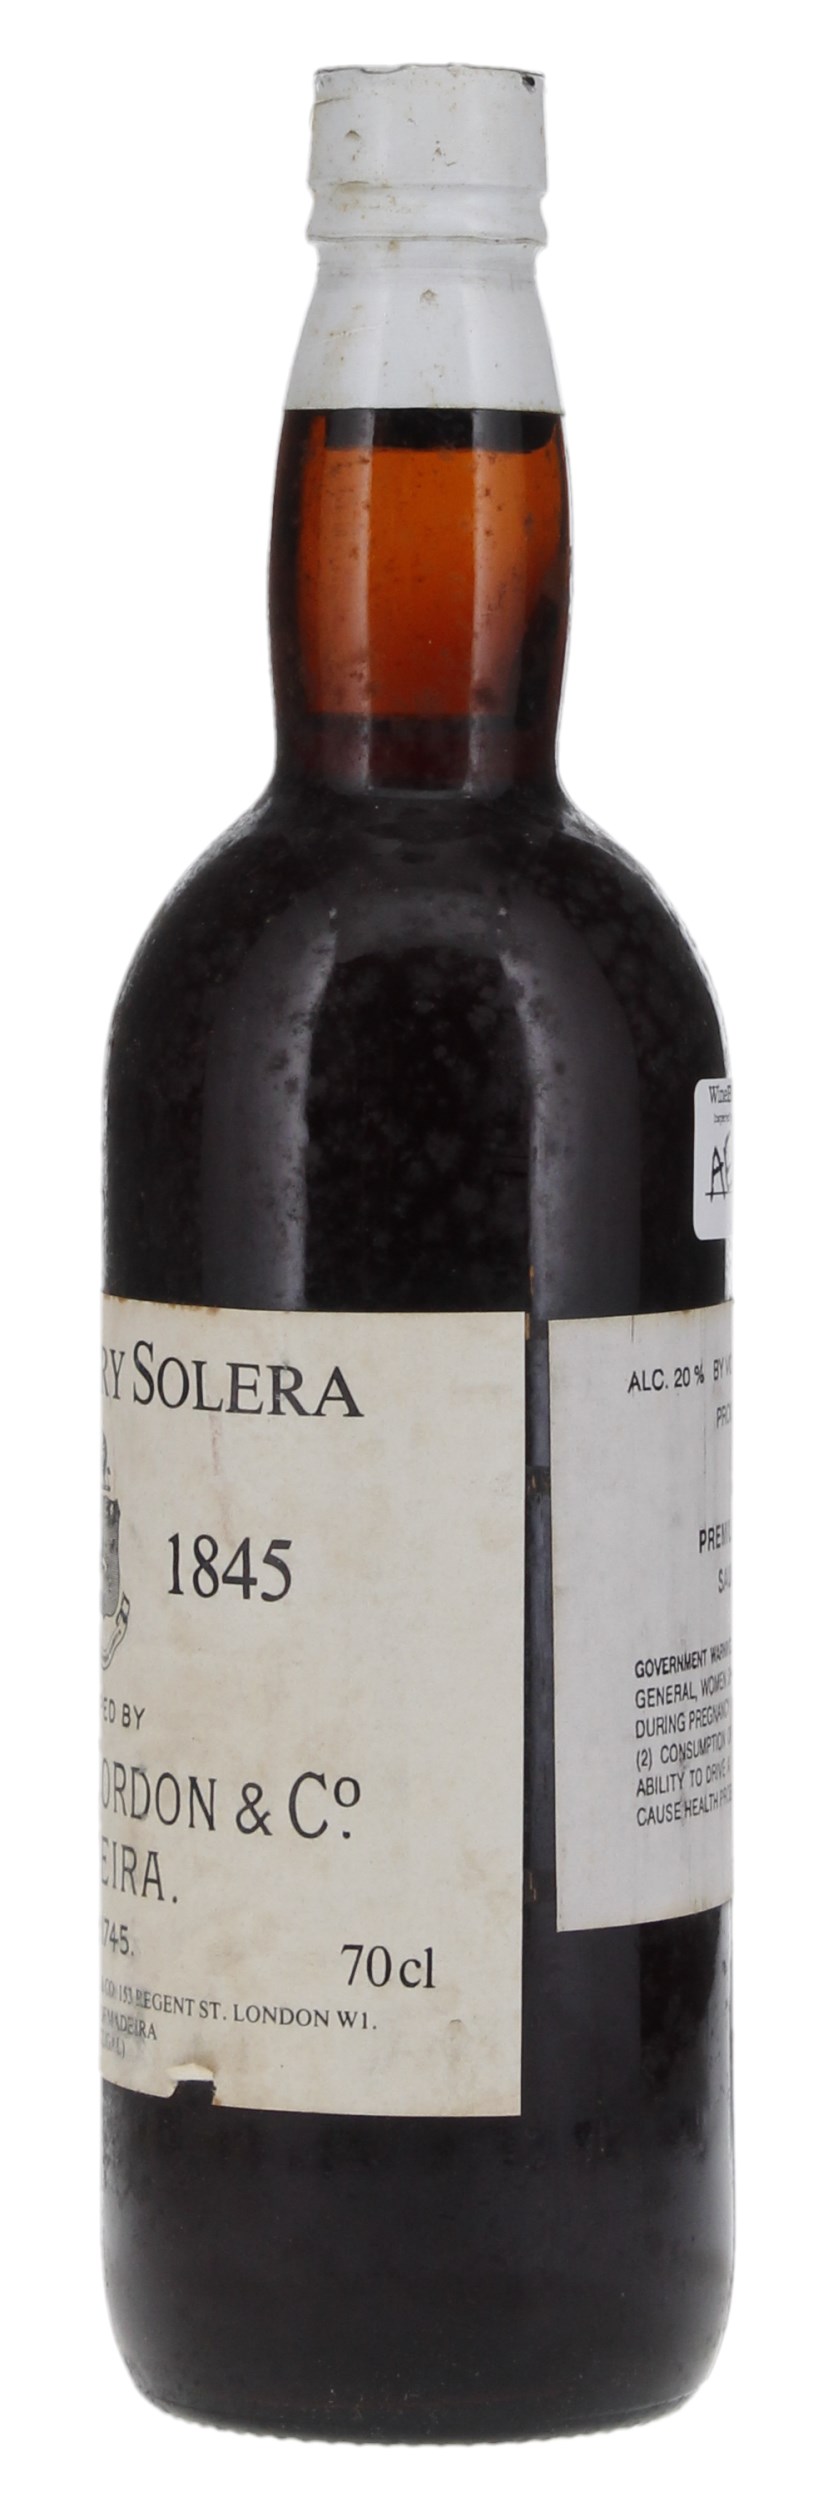 N.V. Cossart Gordon Bual Centenary Solera Madeira 1845, 700ml